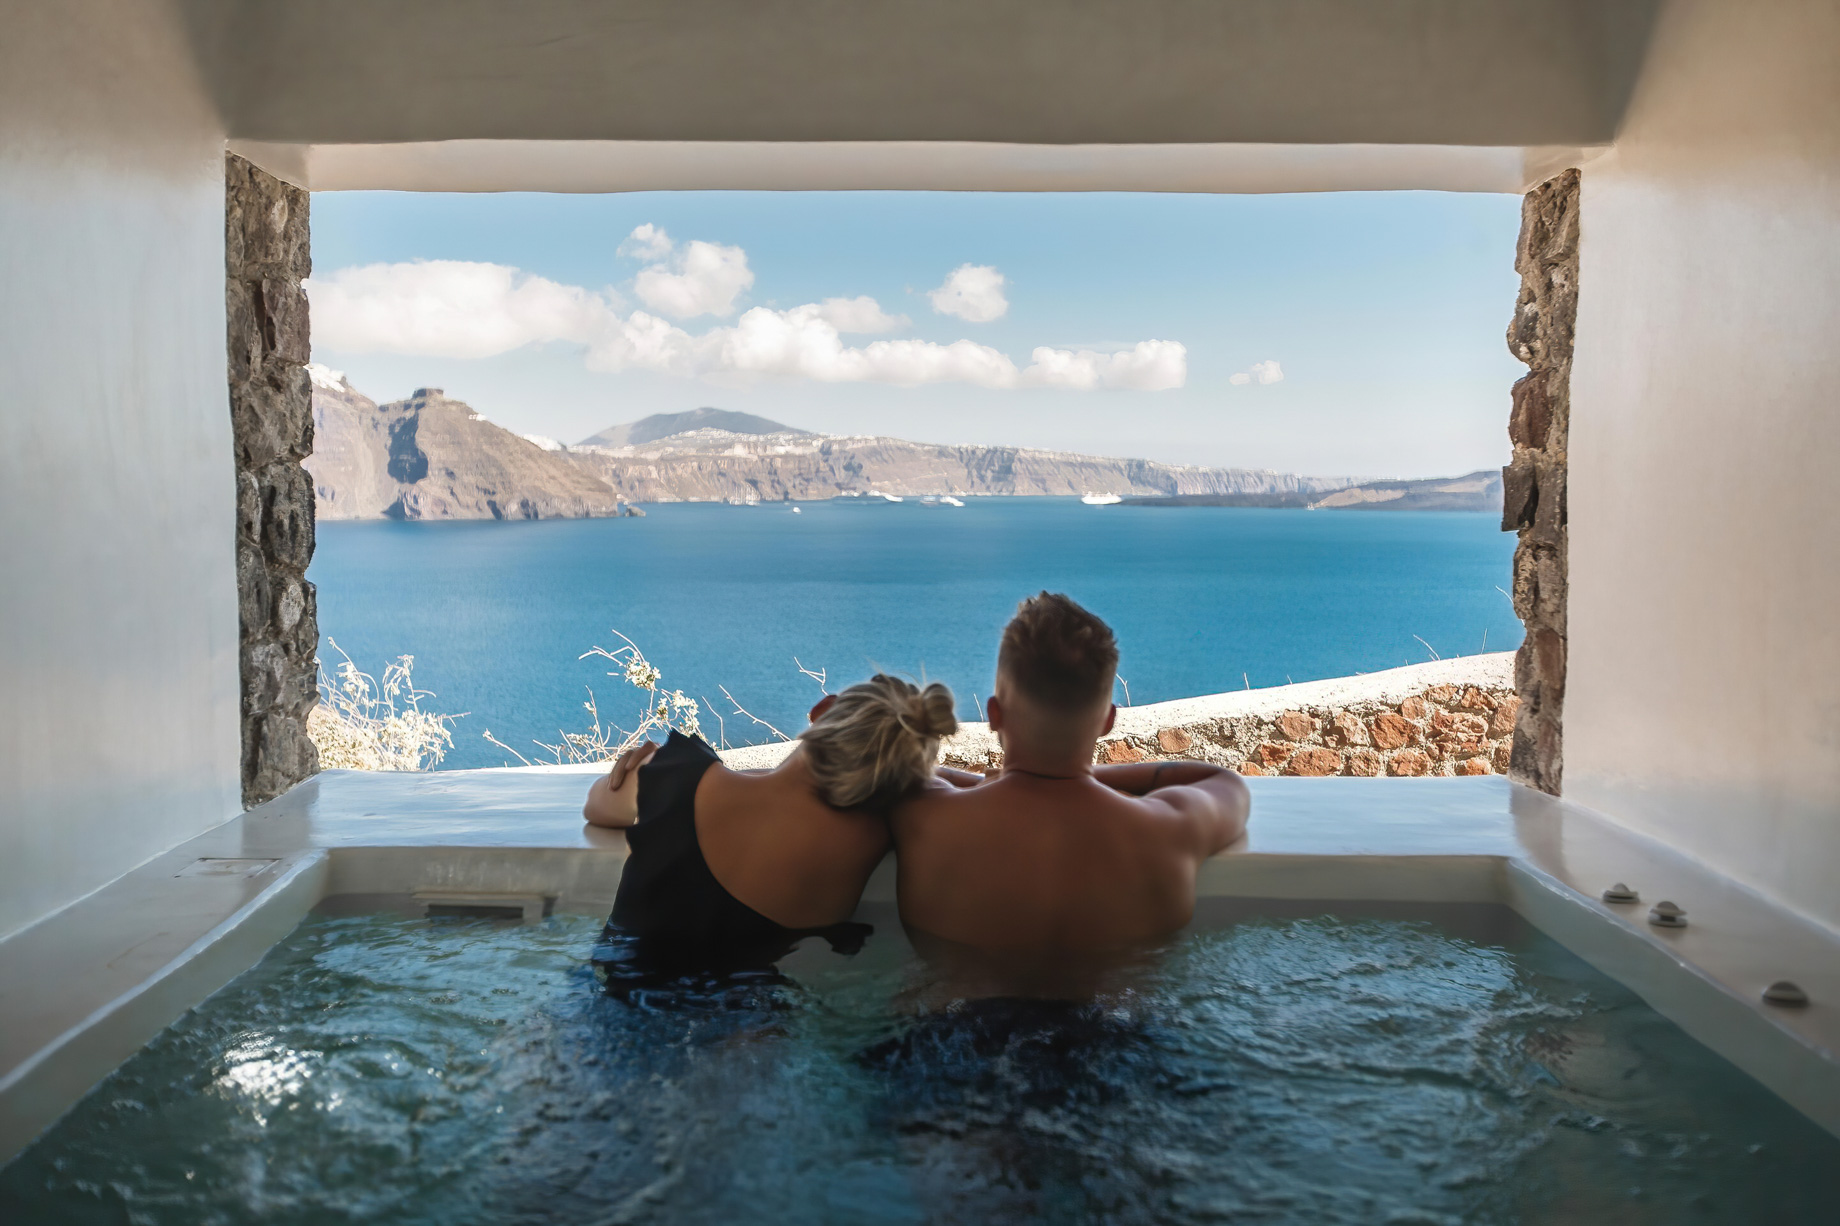 Mystique Hotel Santorini – Oia, Santorini Island, Greece – Clifftop Ocean View Villa Private Jacuzzi